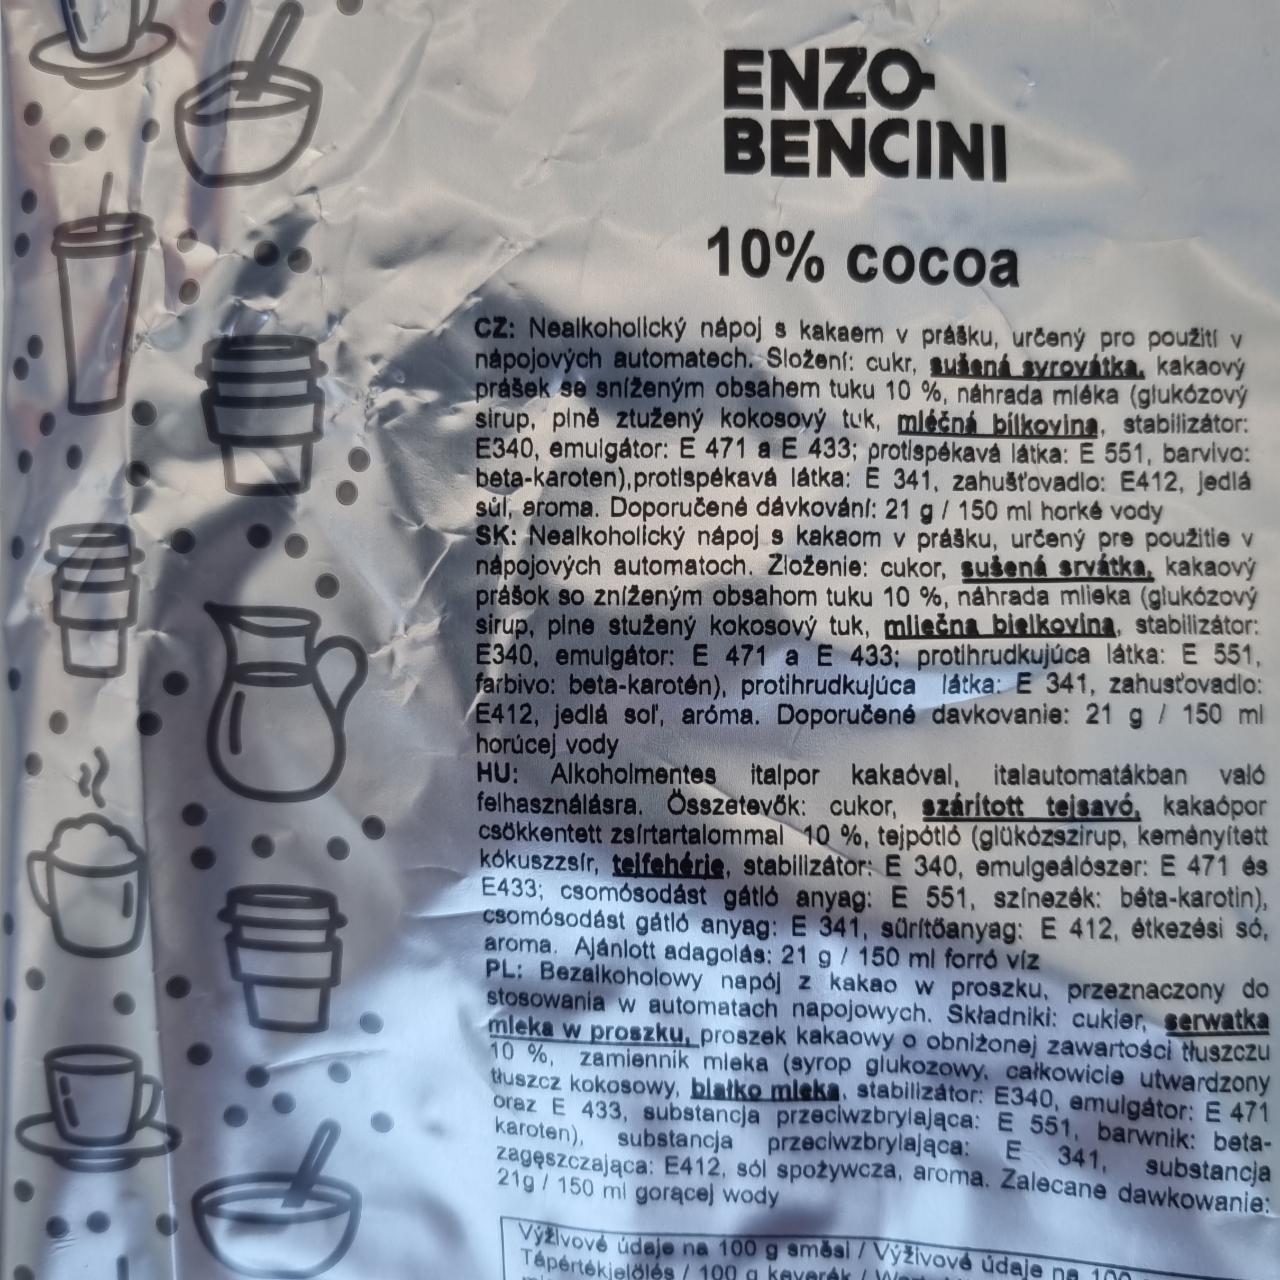 Fotografie - 10% cocoa Enzo-Bencini